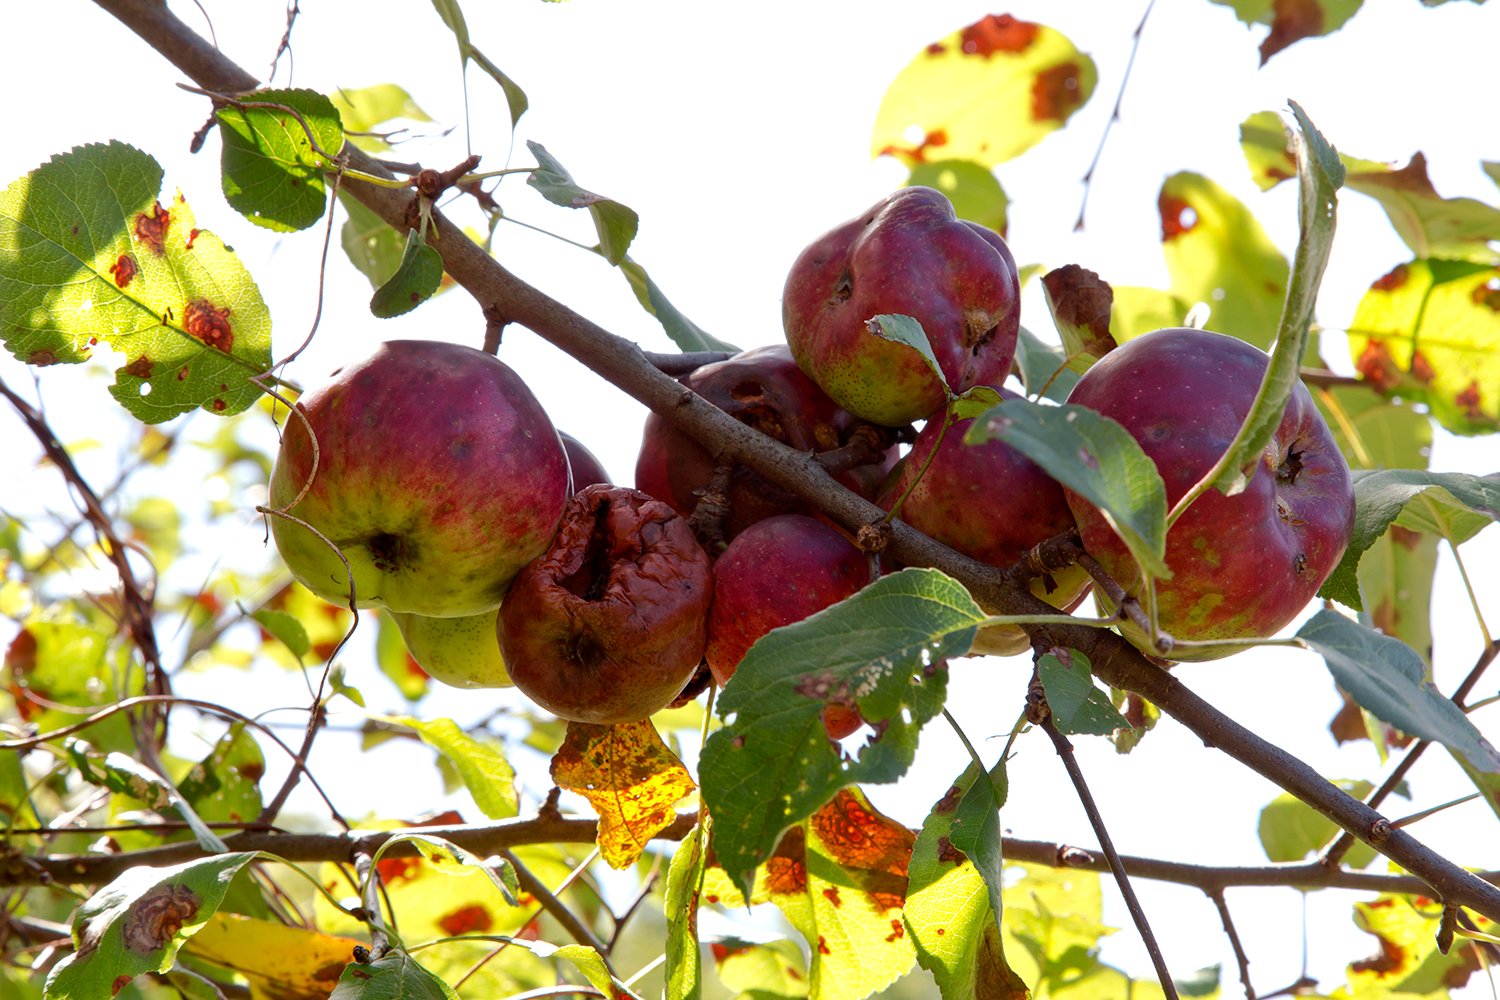   Agloe, NY, Red Apple Tree Bunch (Malus Domestica)&nbsp;#1  Photographic documentation 